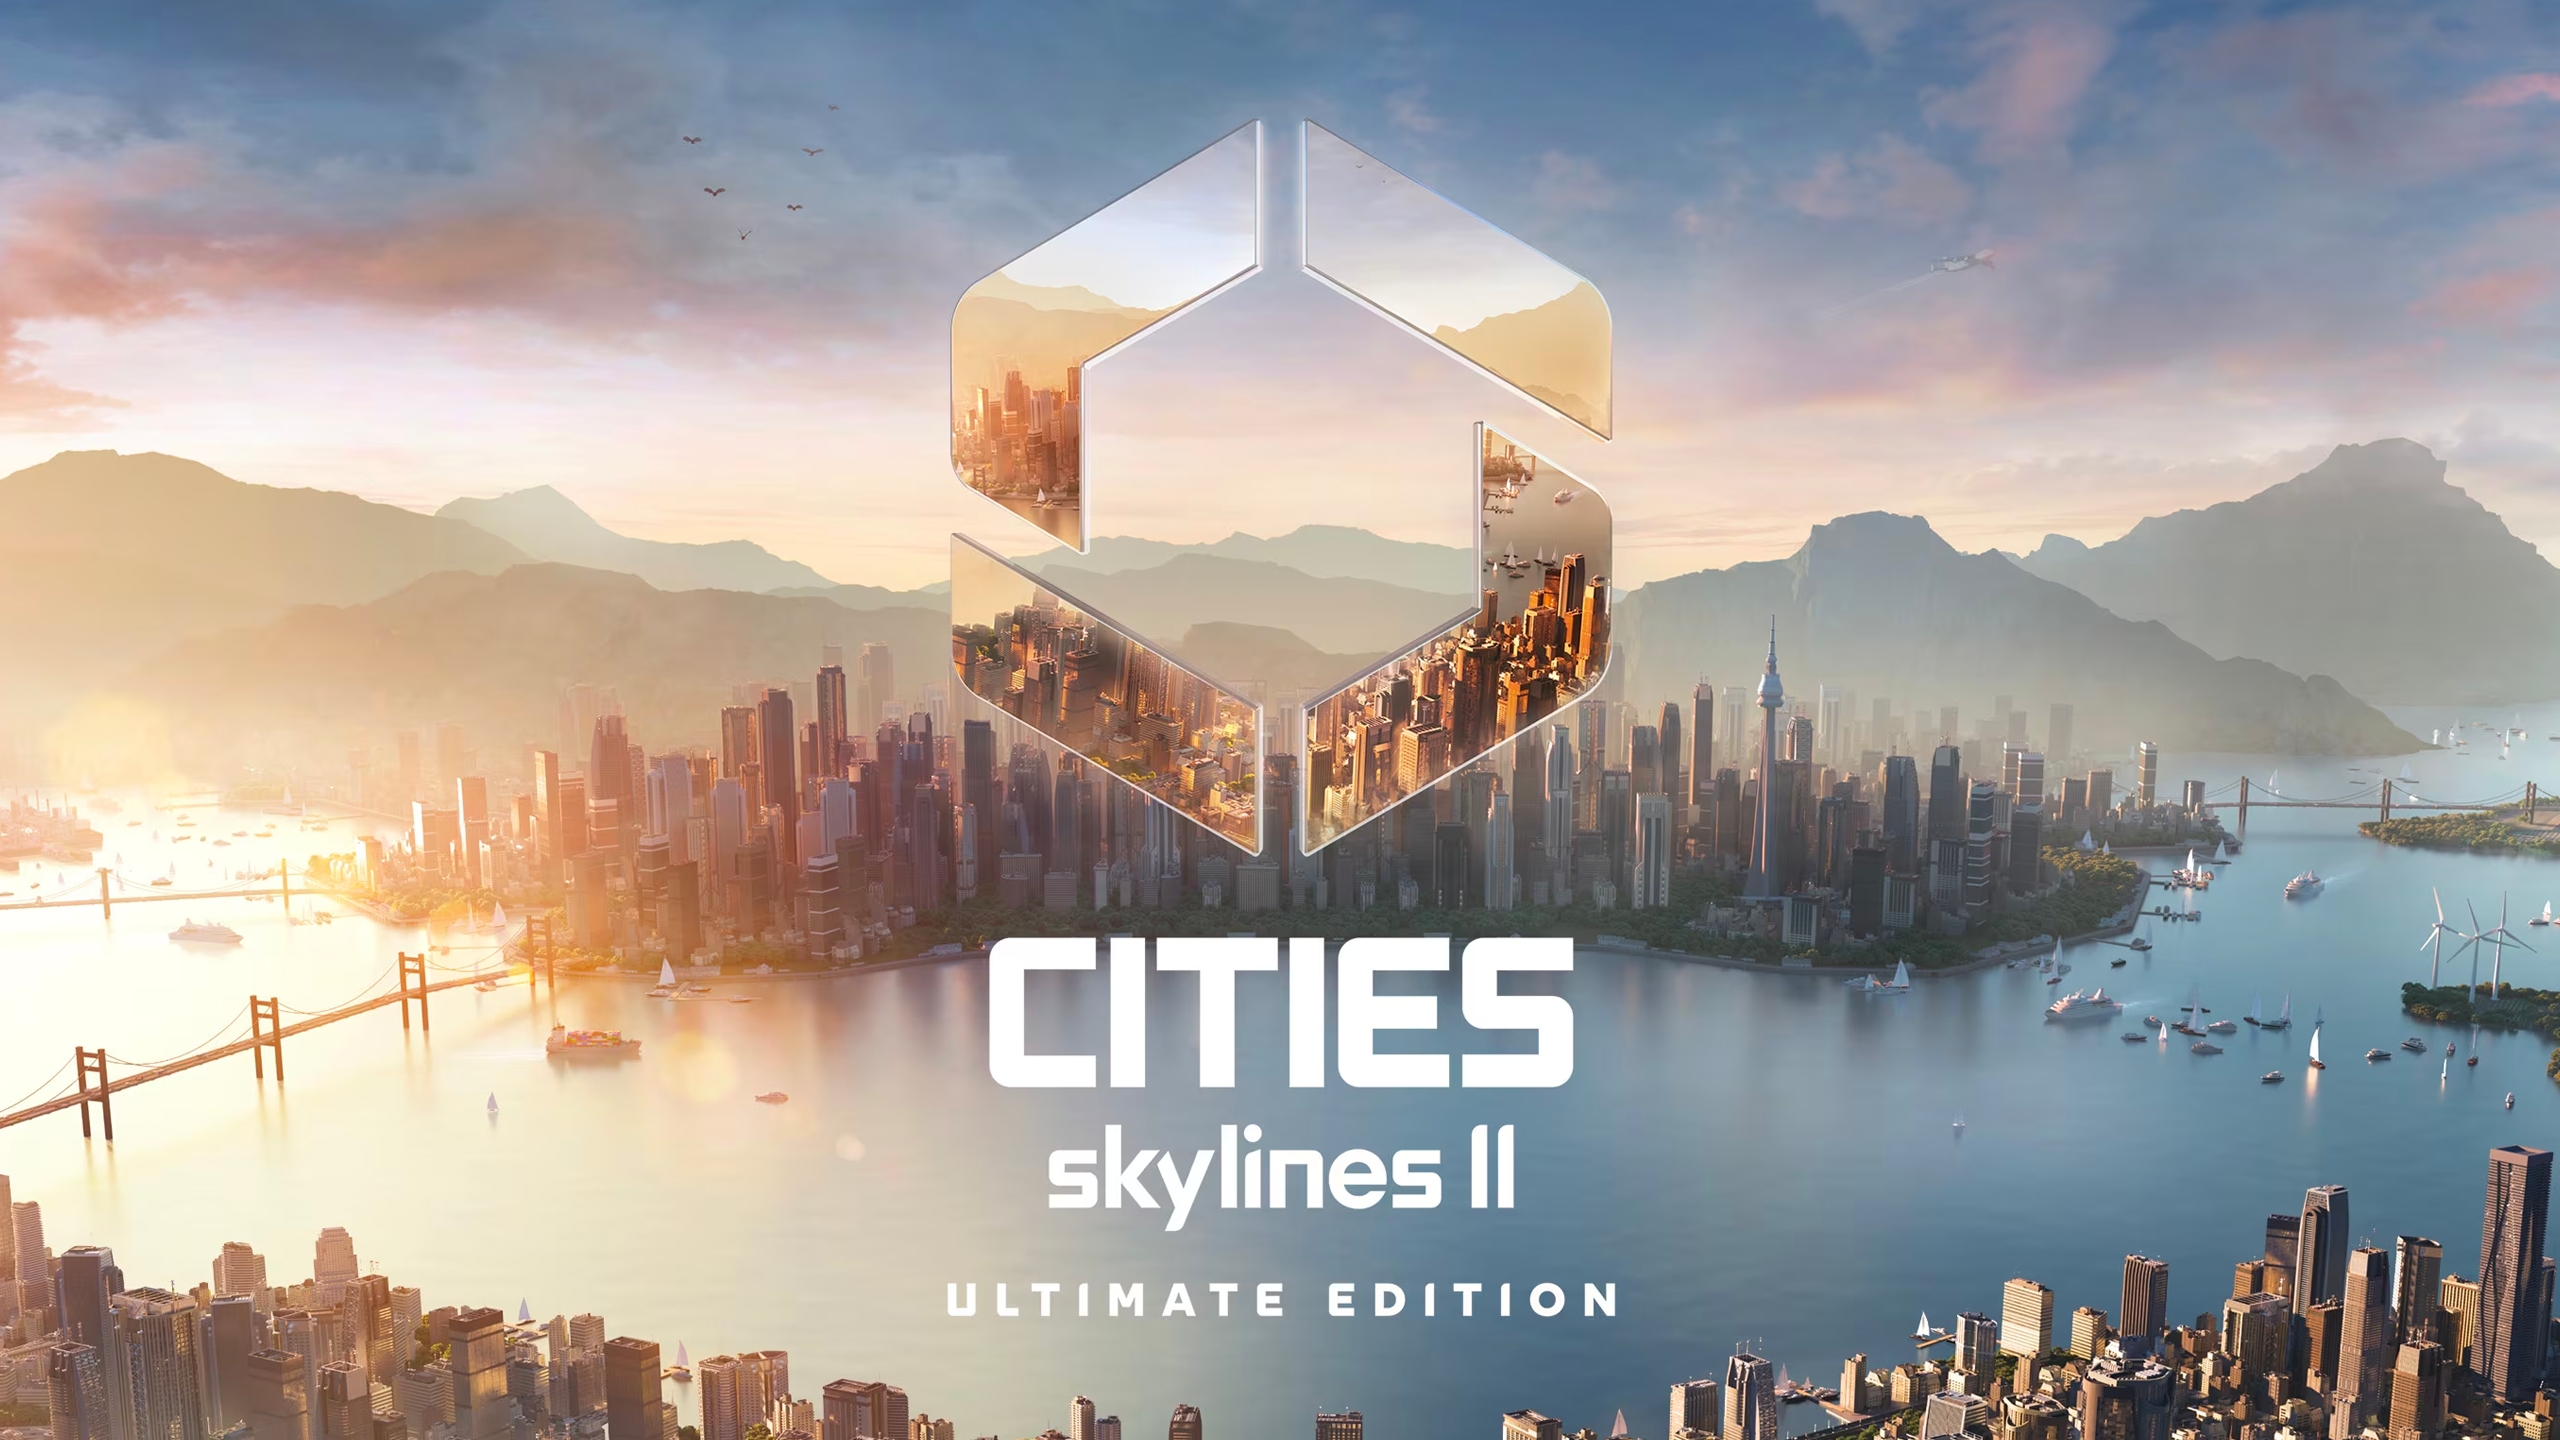 Skyline Gaming Studios